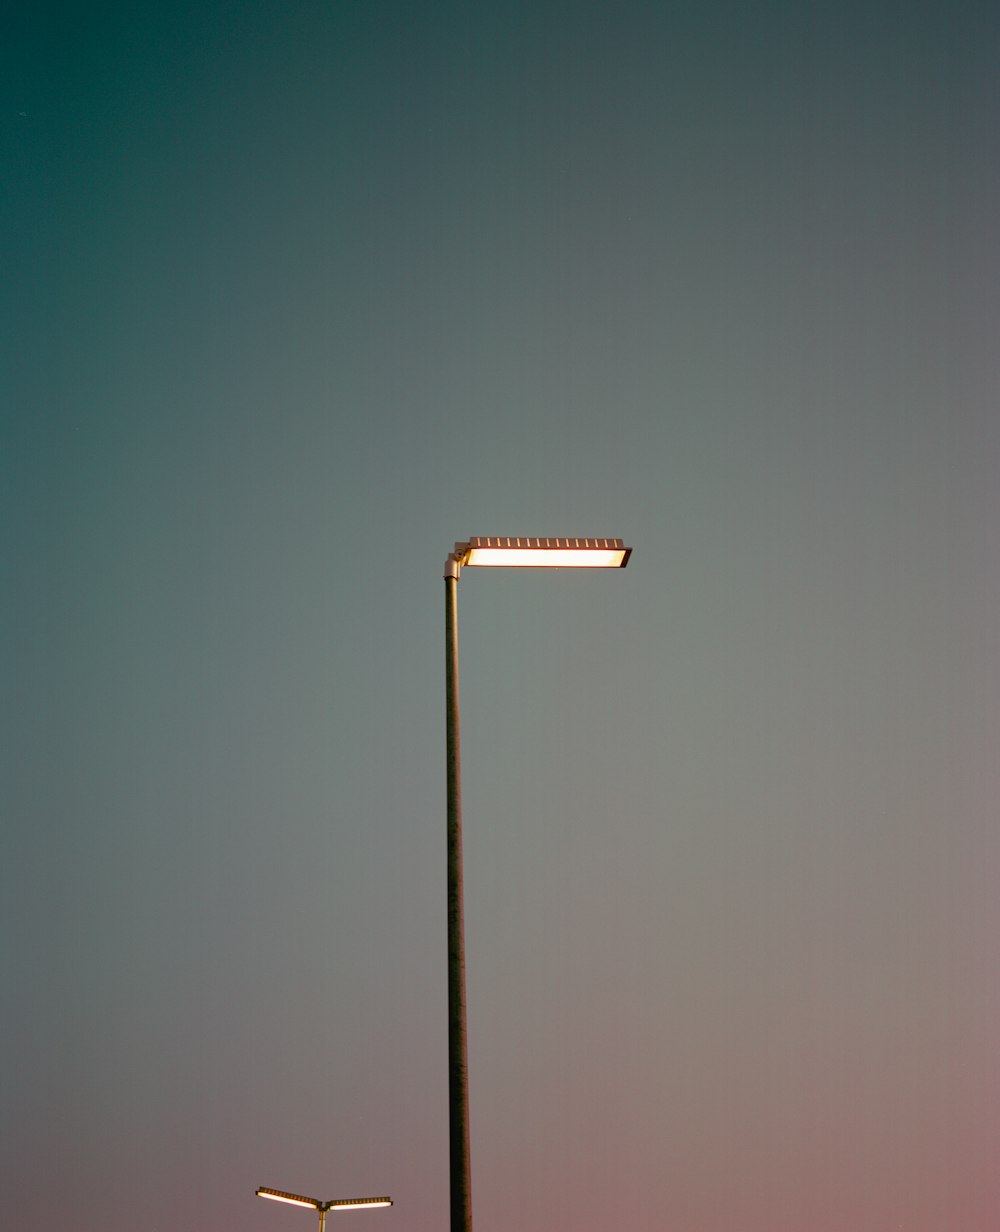 a street light sitting next to a traffic light